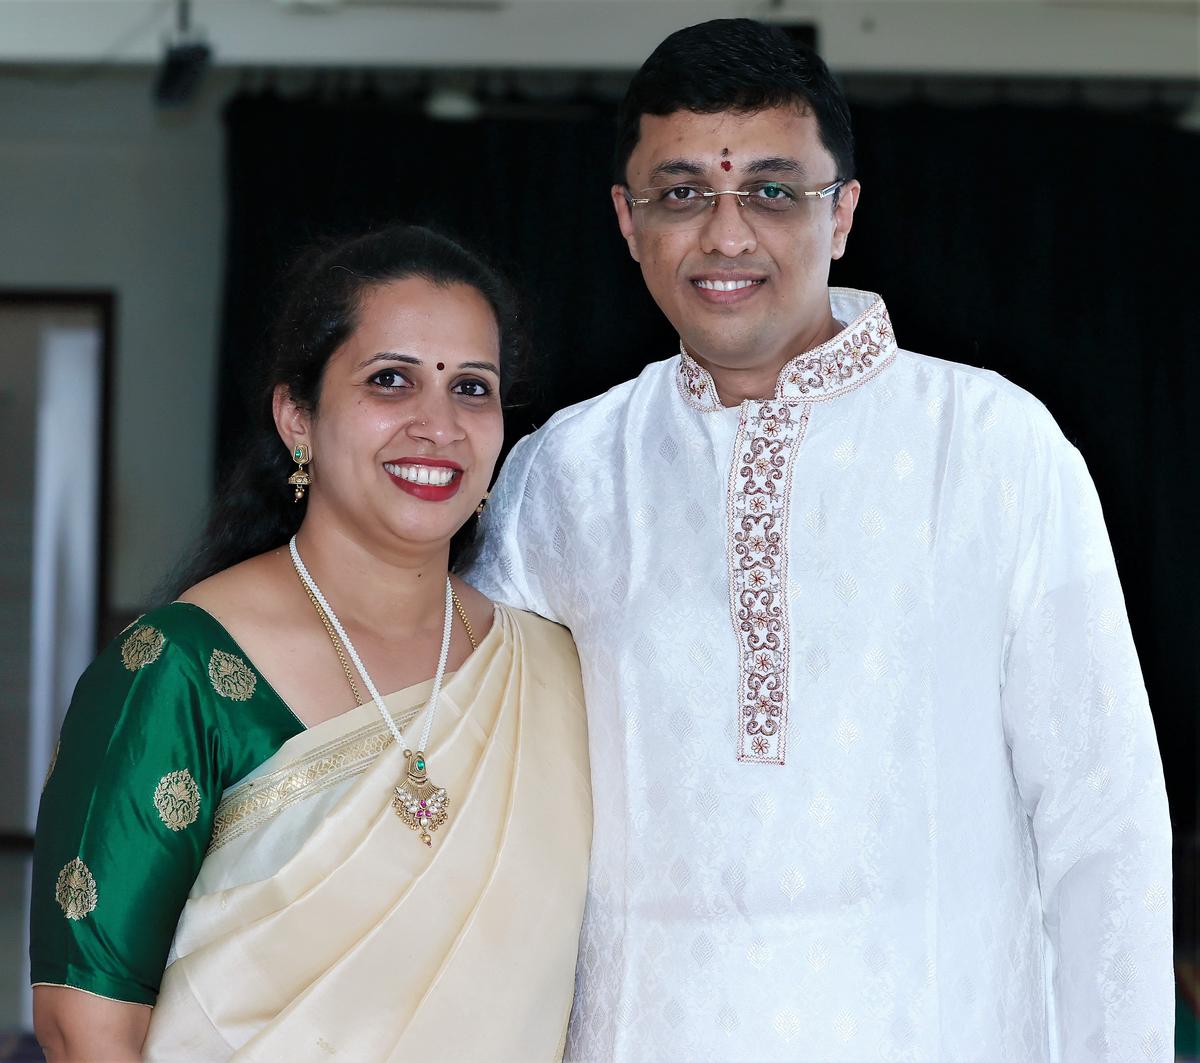 Guru Prasanna with his wife, Pallavi, with whom he started the Samatva Foundation